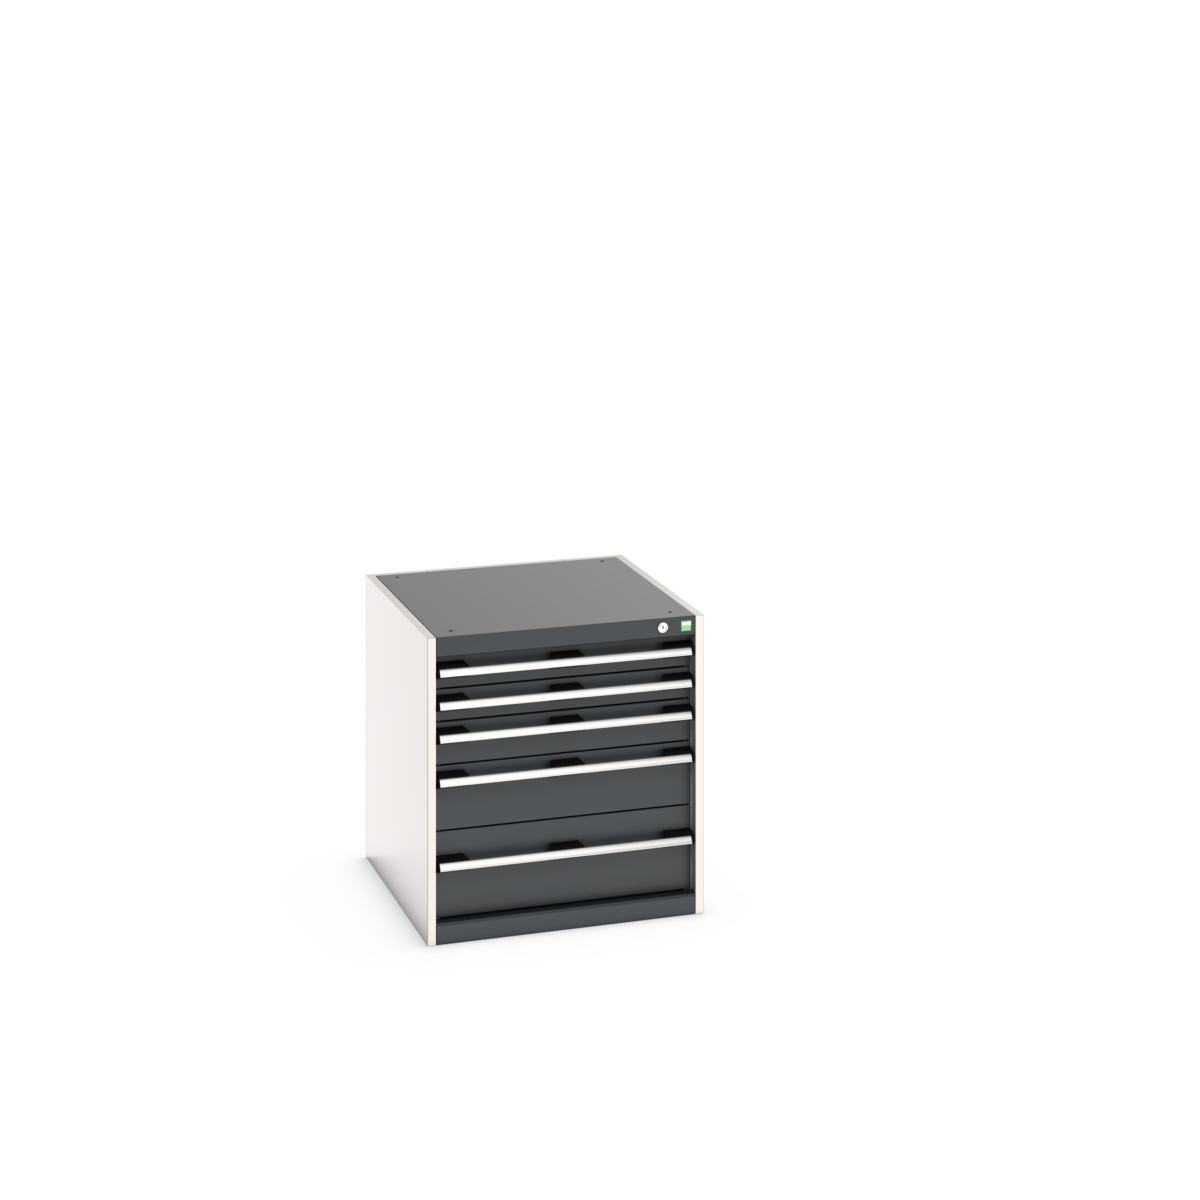 40027007. - cubio drawer cabinet